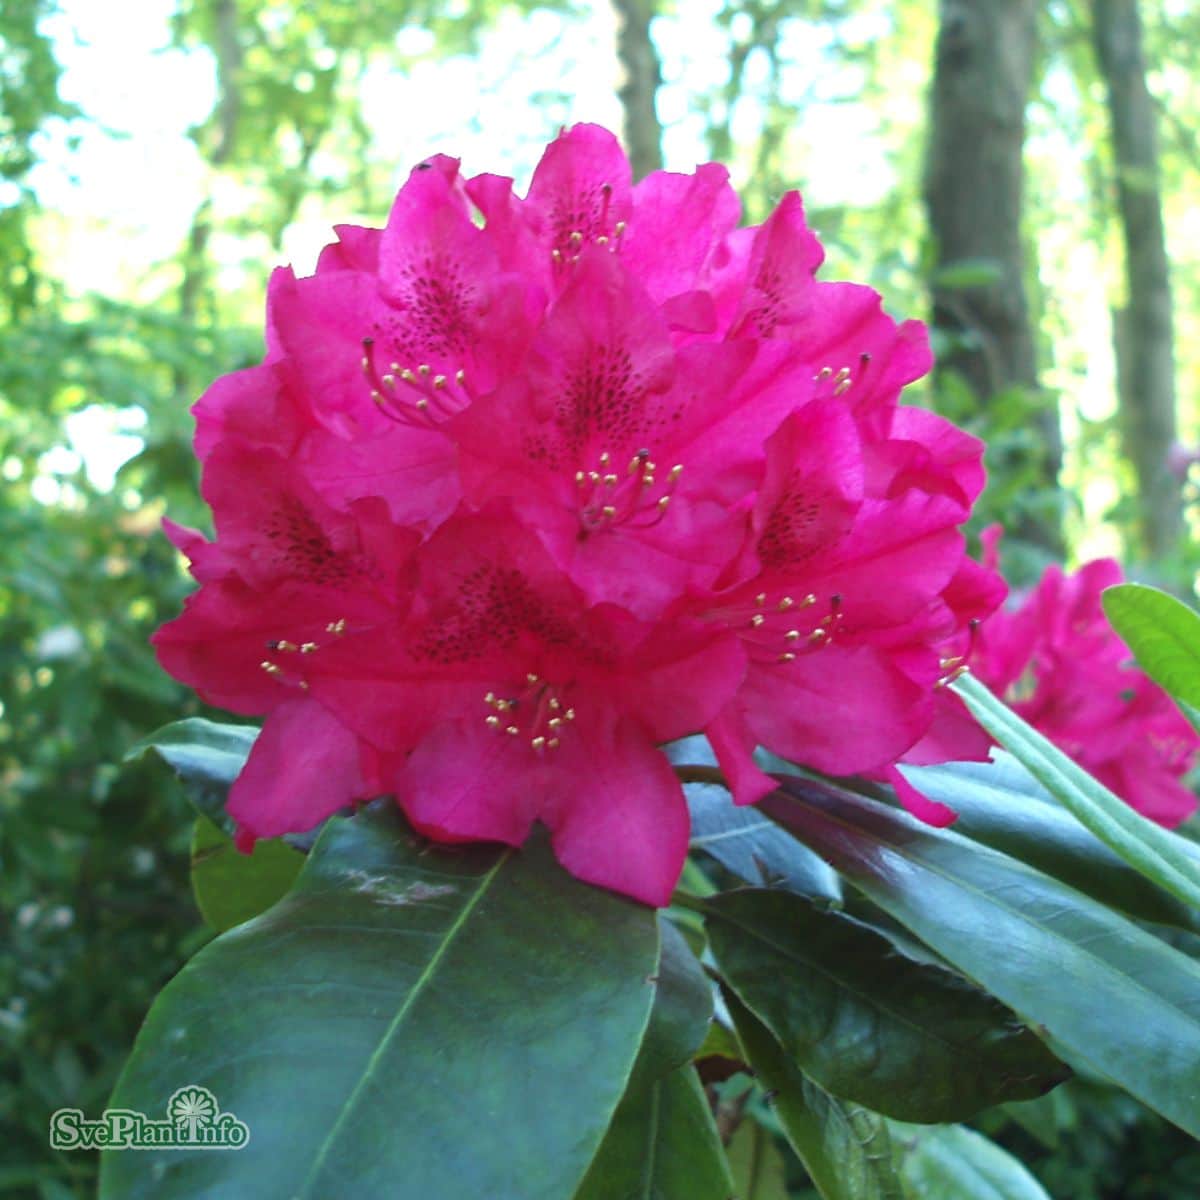 rhododendron-nova-zembla-co-30-40cm-1-pack-1